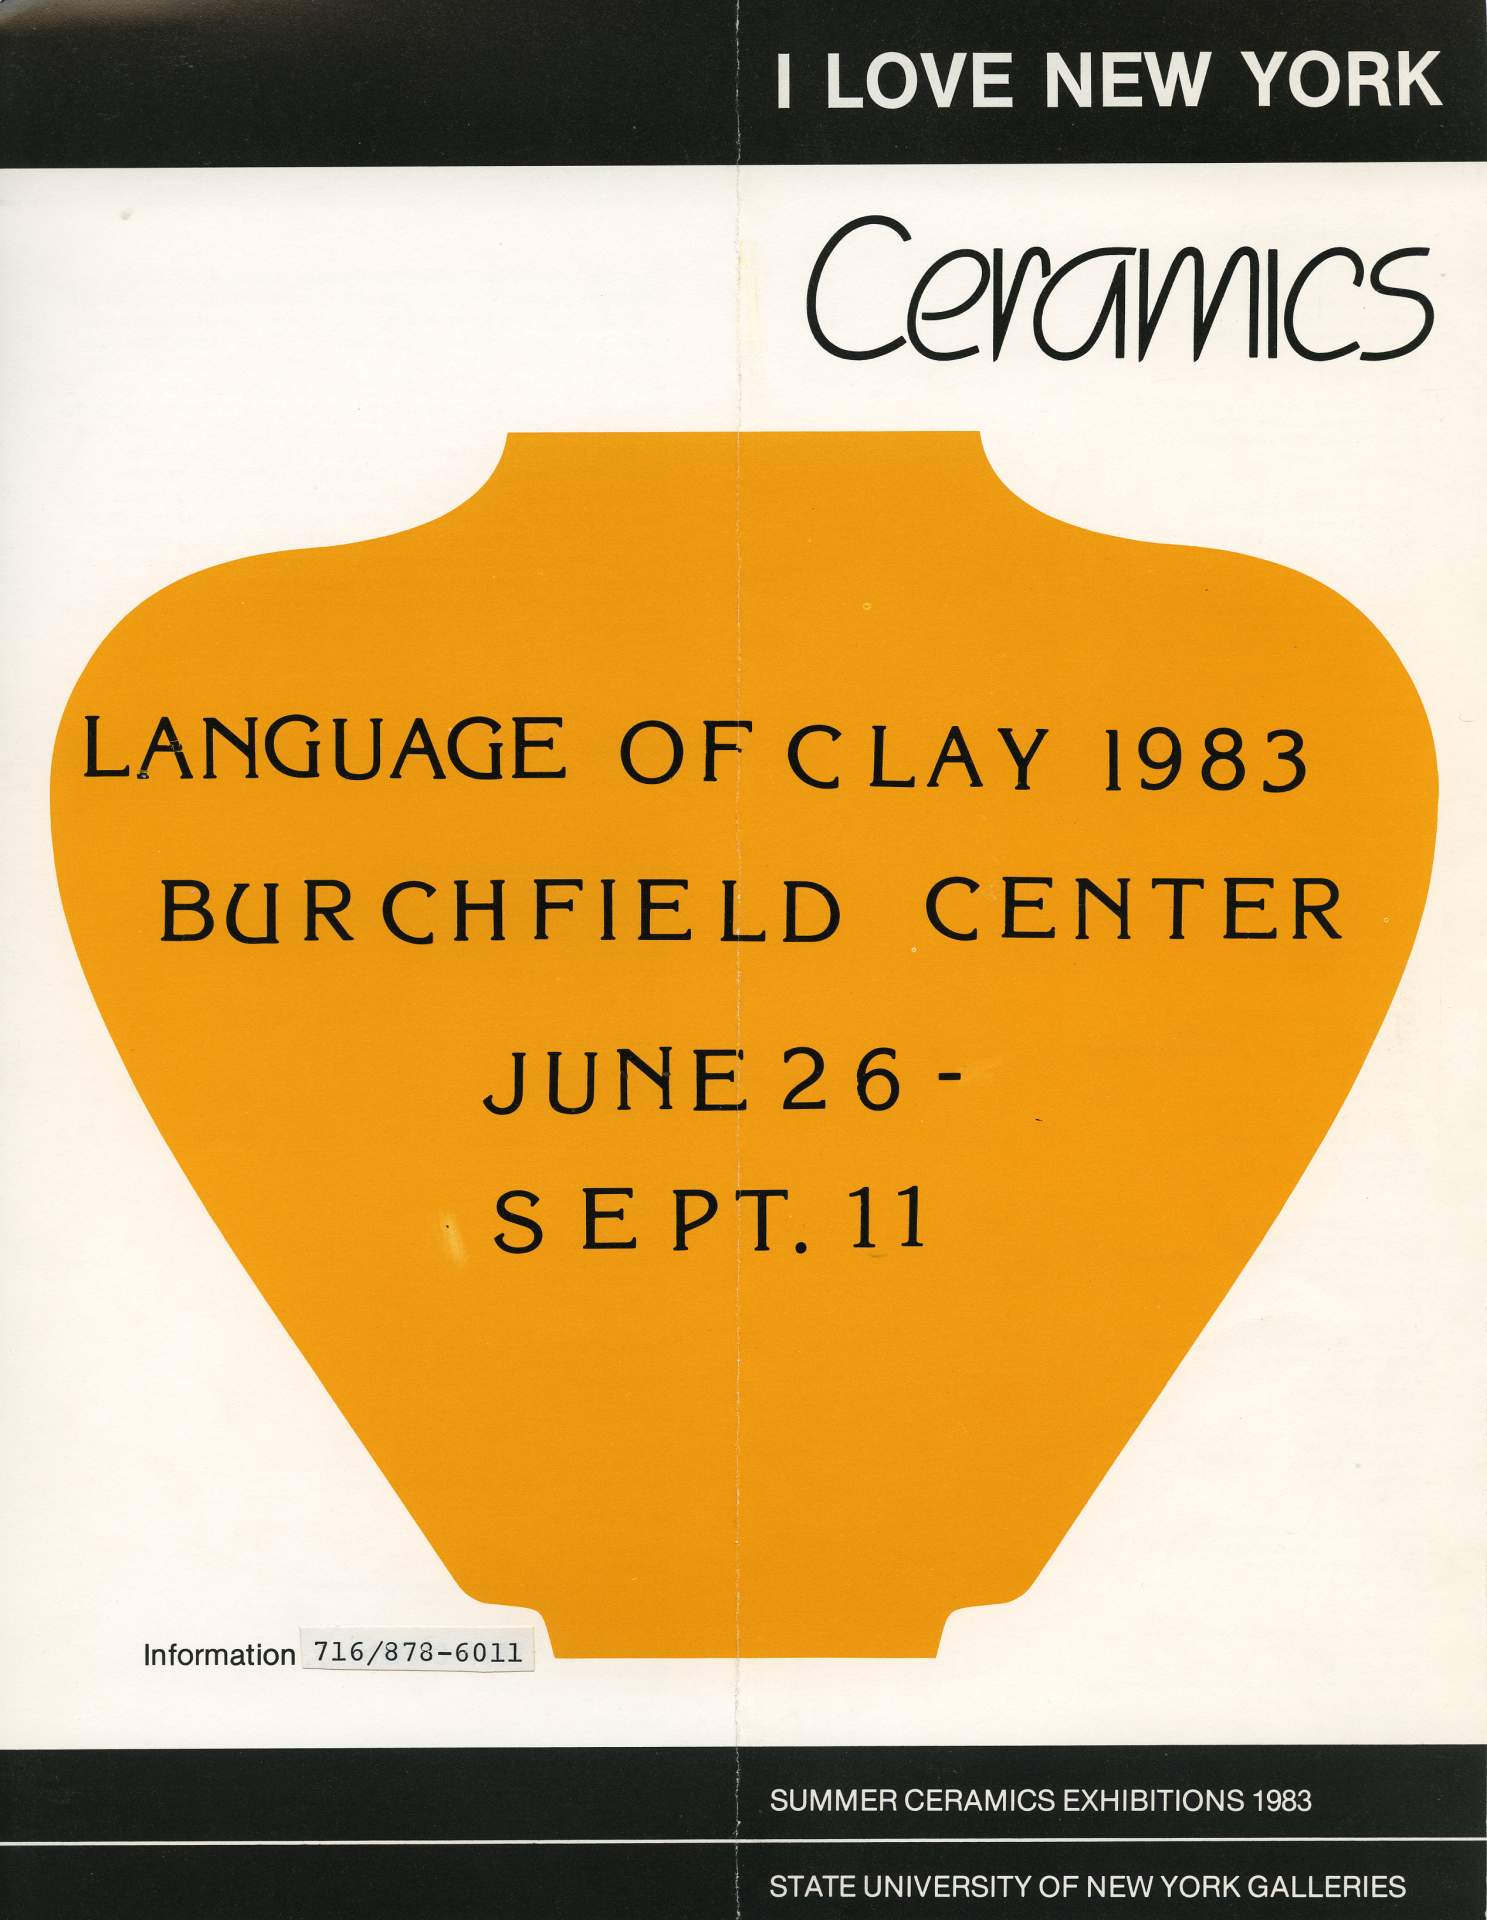 I Love New York Ceramics: Language of Clay 1983 Summer Ceramics Exhibitions at SUNY Galleries